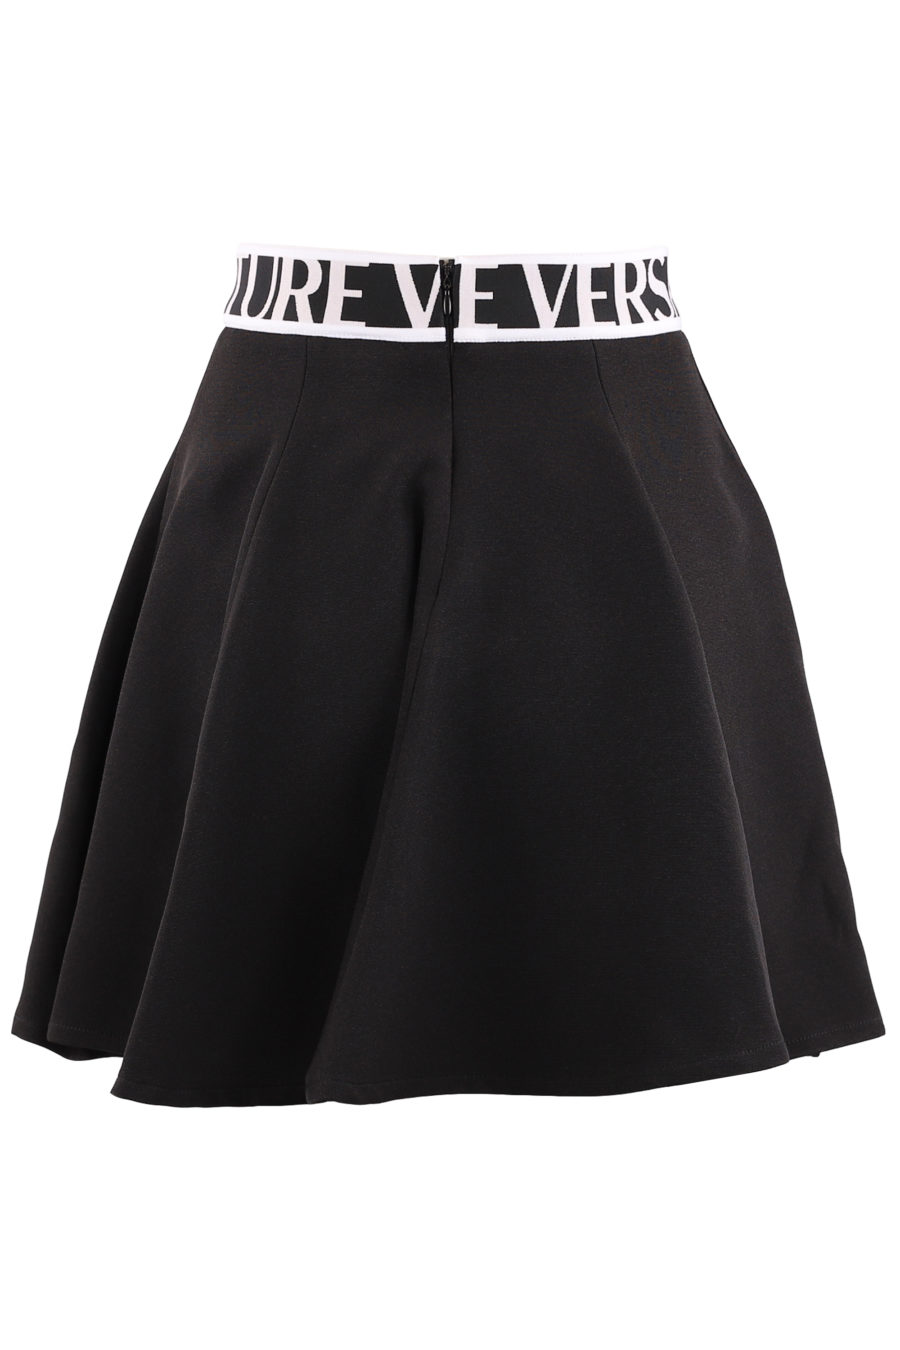 Black skirt with white logo - 97239681acedc9da32c0547089d68a92ad524870